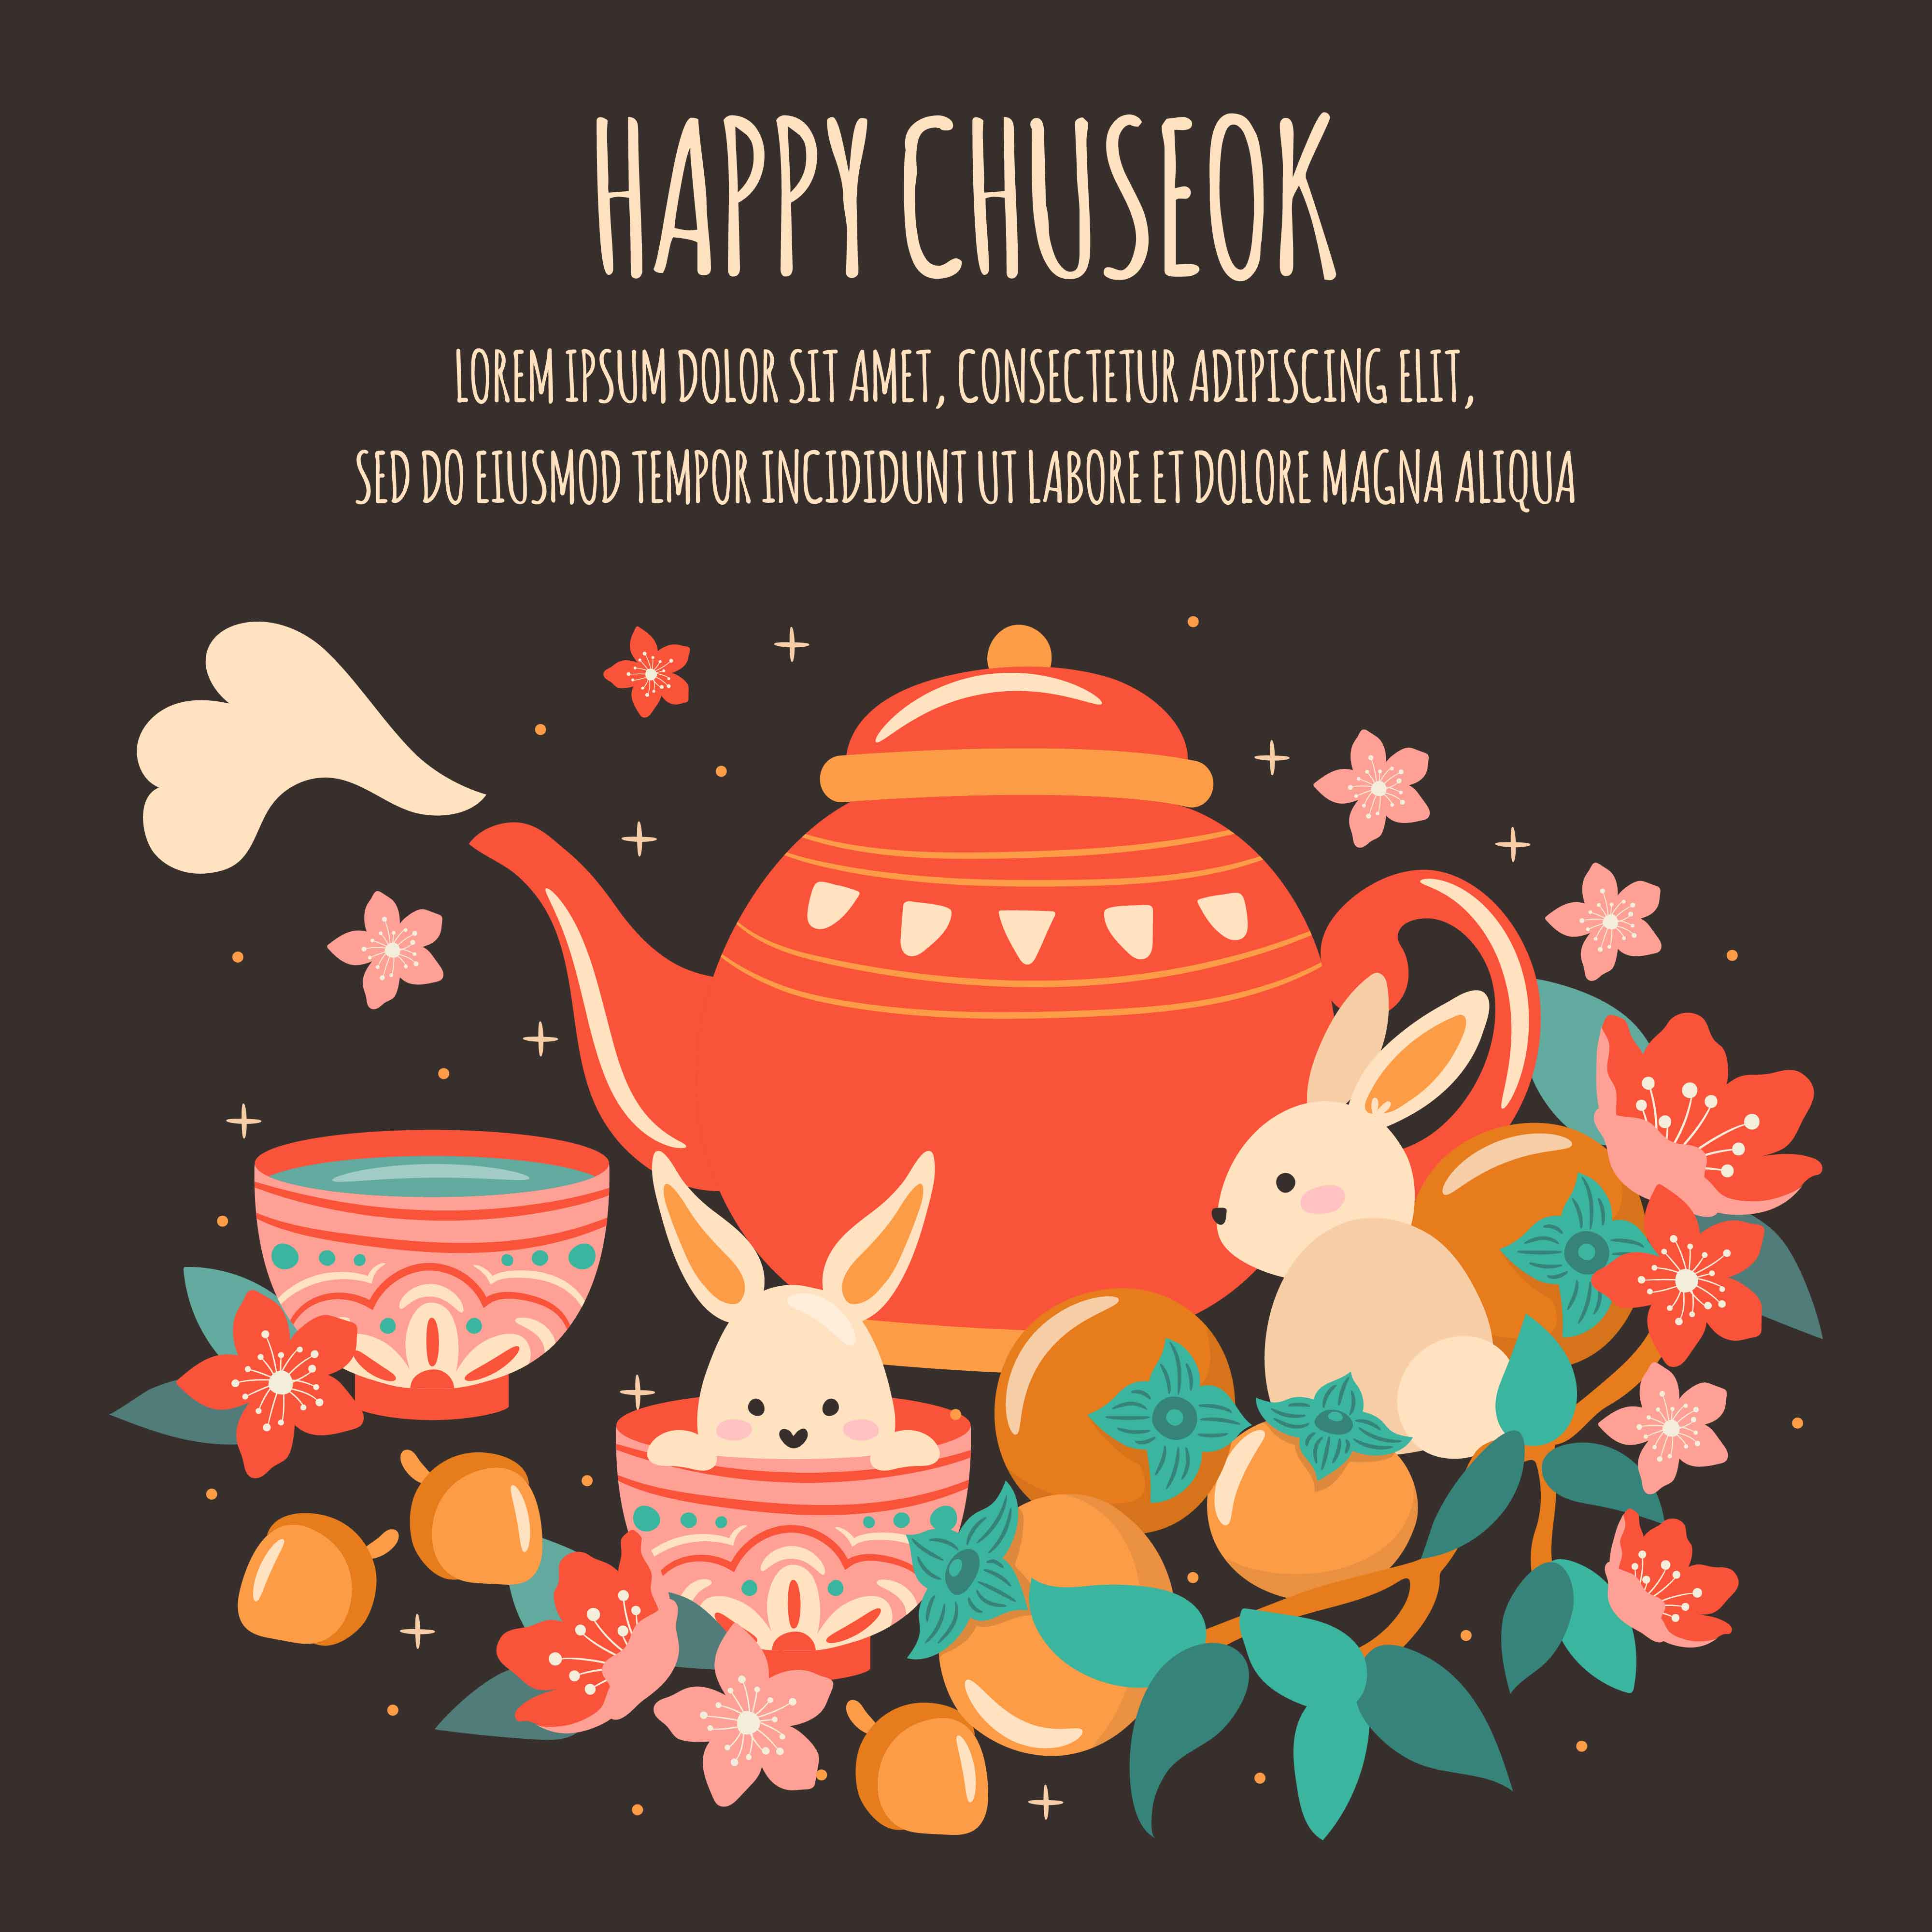 Chuseok is the korean harvest moon. Chuseok Cake. Happy Chuseok. Chuseok Rice Cakes with Fruit. Корейский праздник Чусок с текстом на английском.